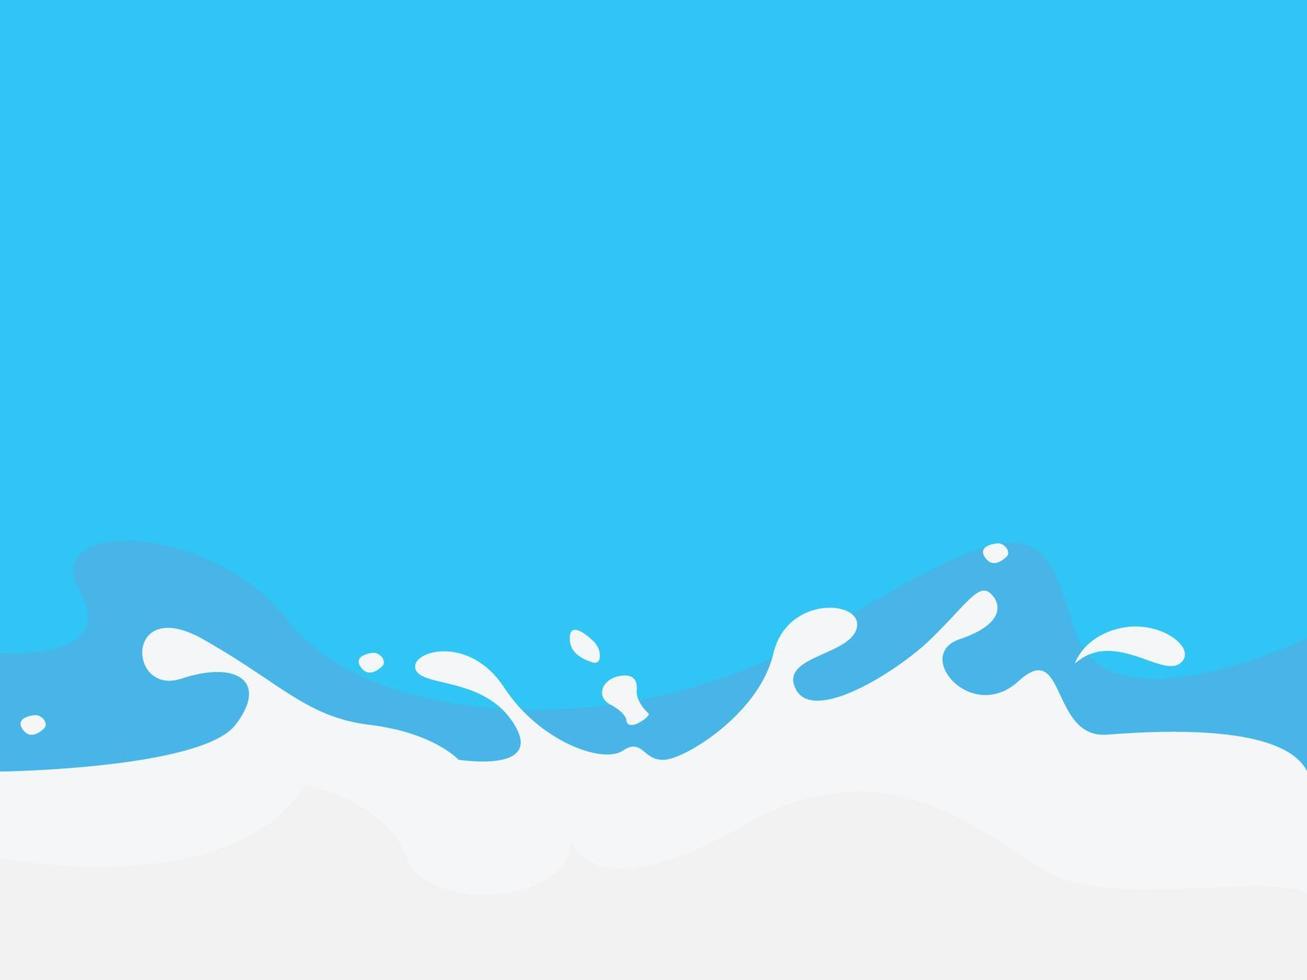 Splashing milk, milk background, design template of milk vector